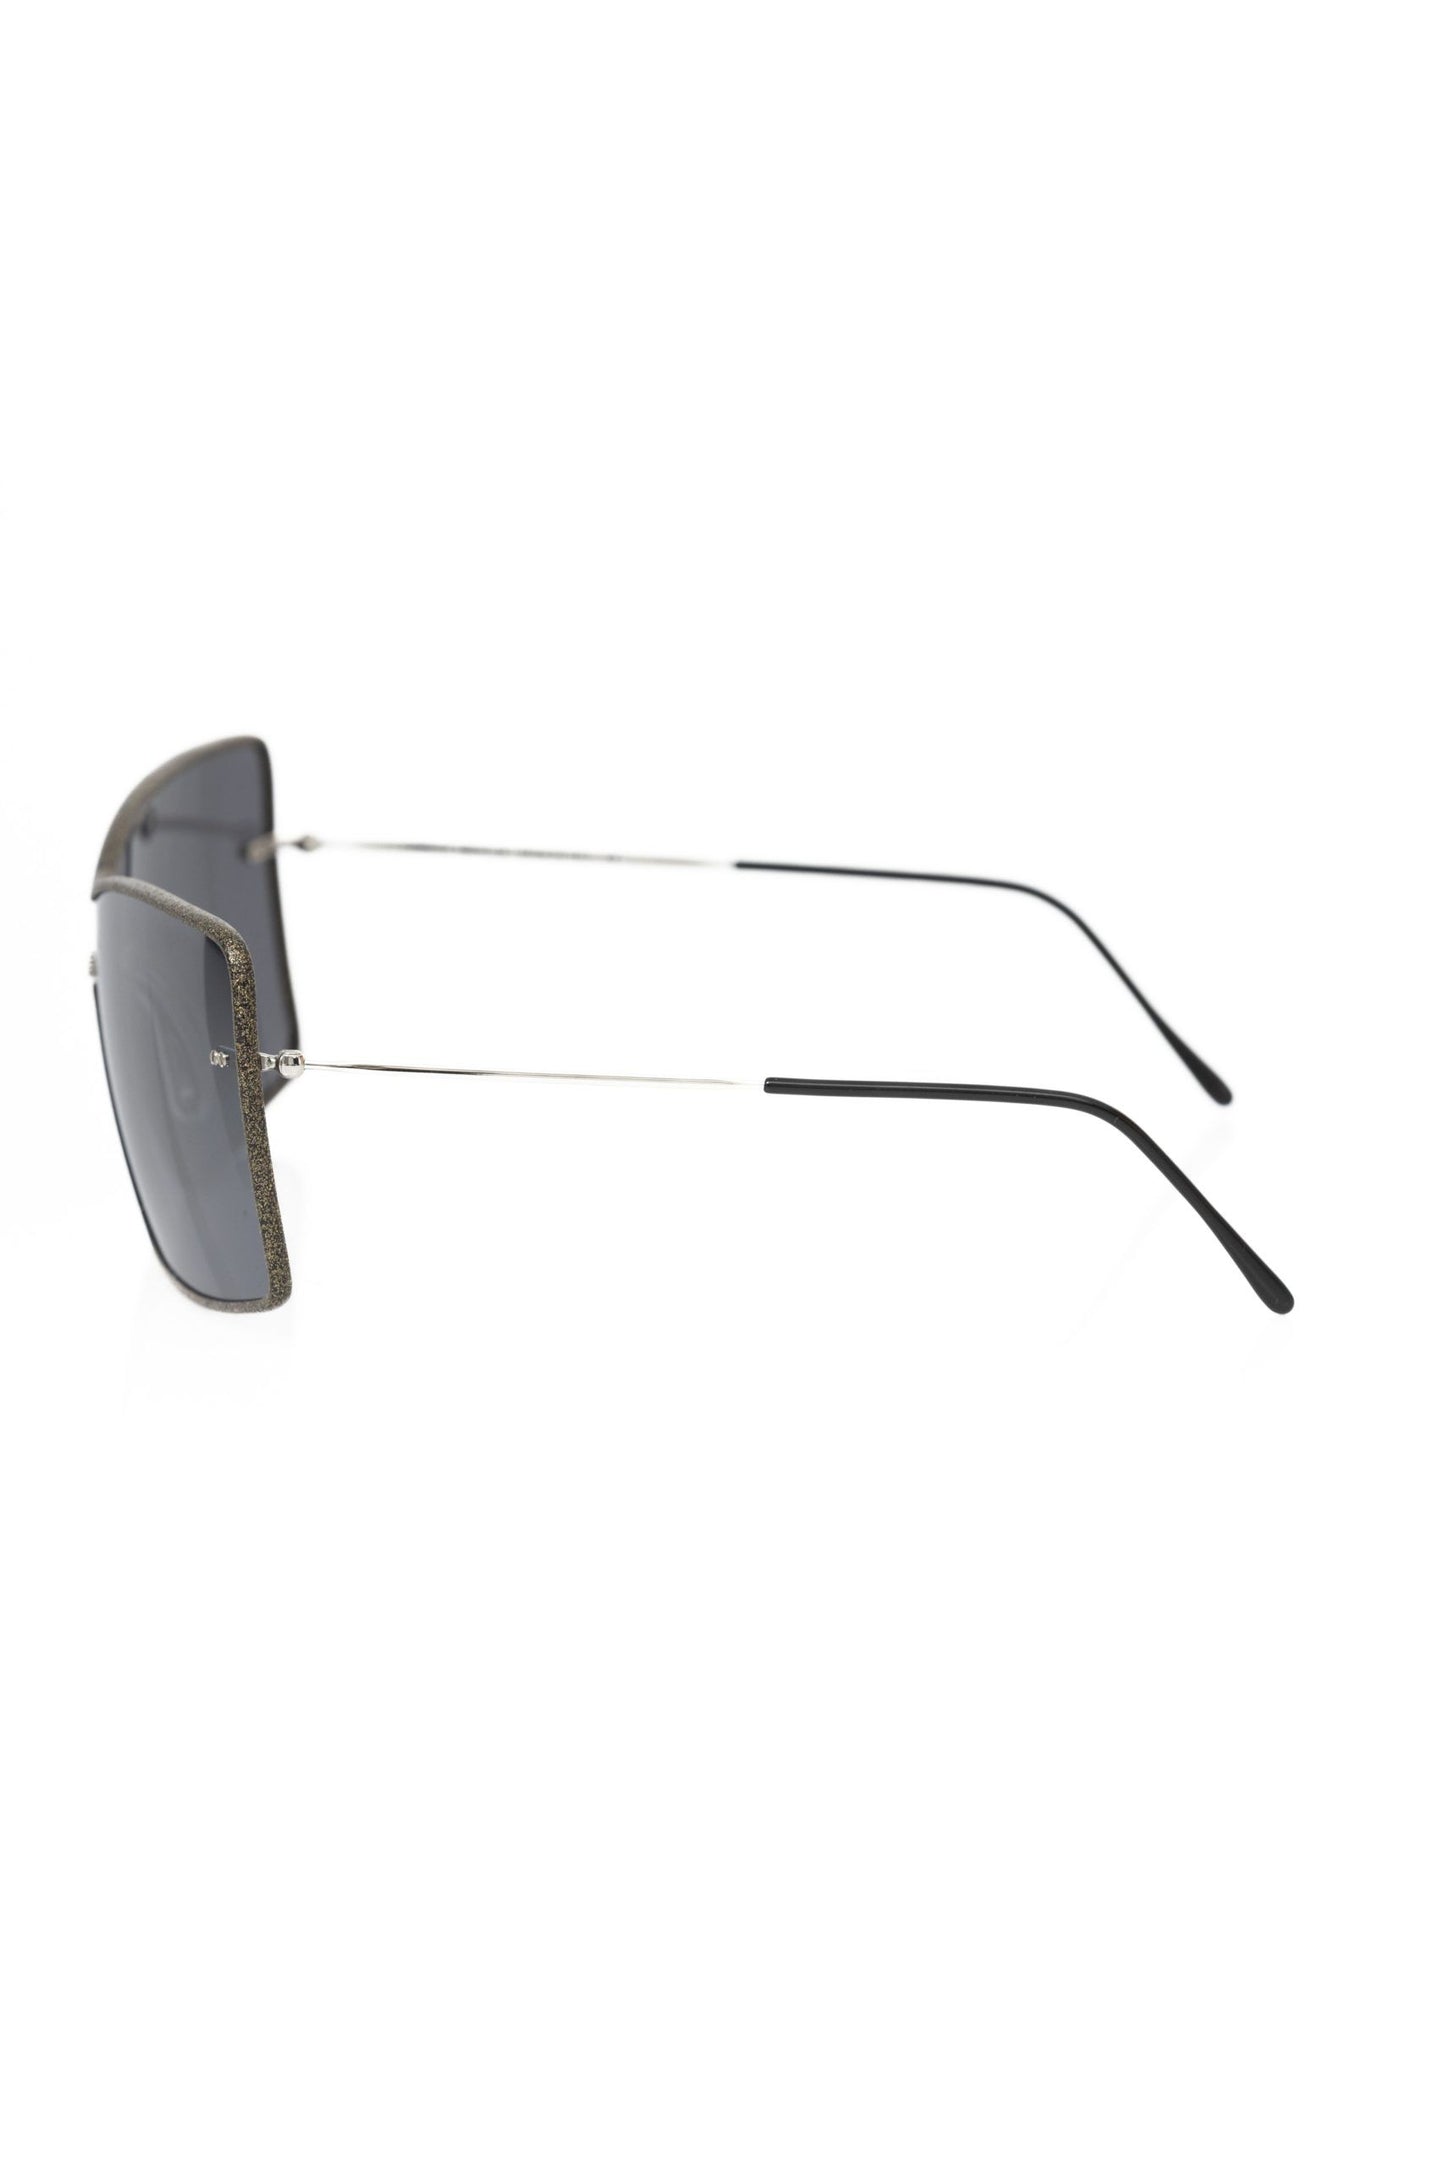 Frankie Morello FRMO-22093 Black Metallic Fibre Sunglasses